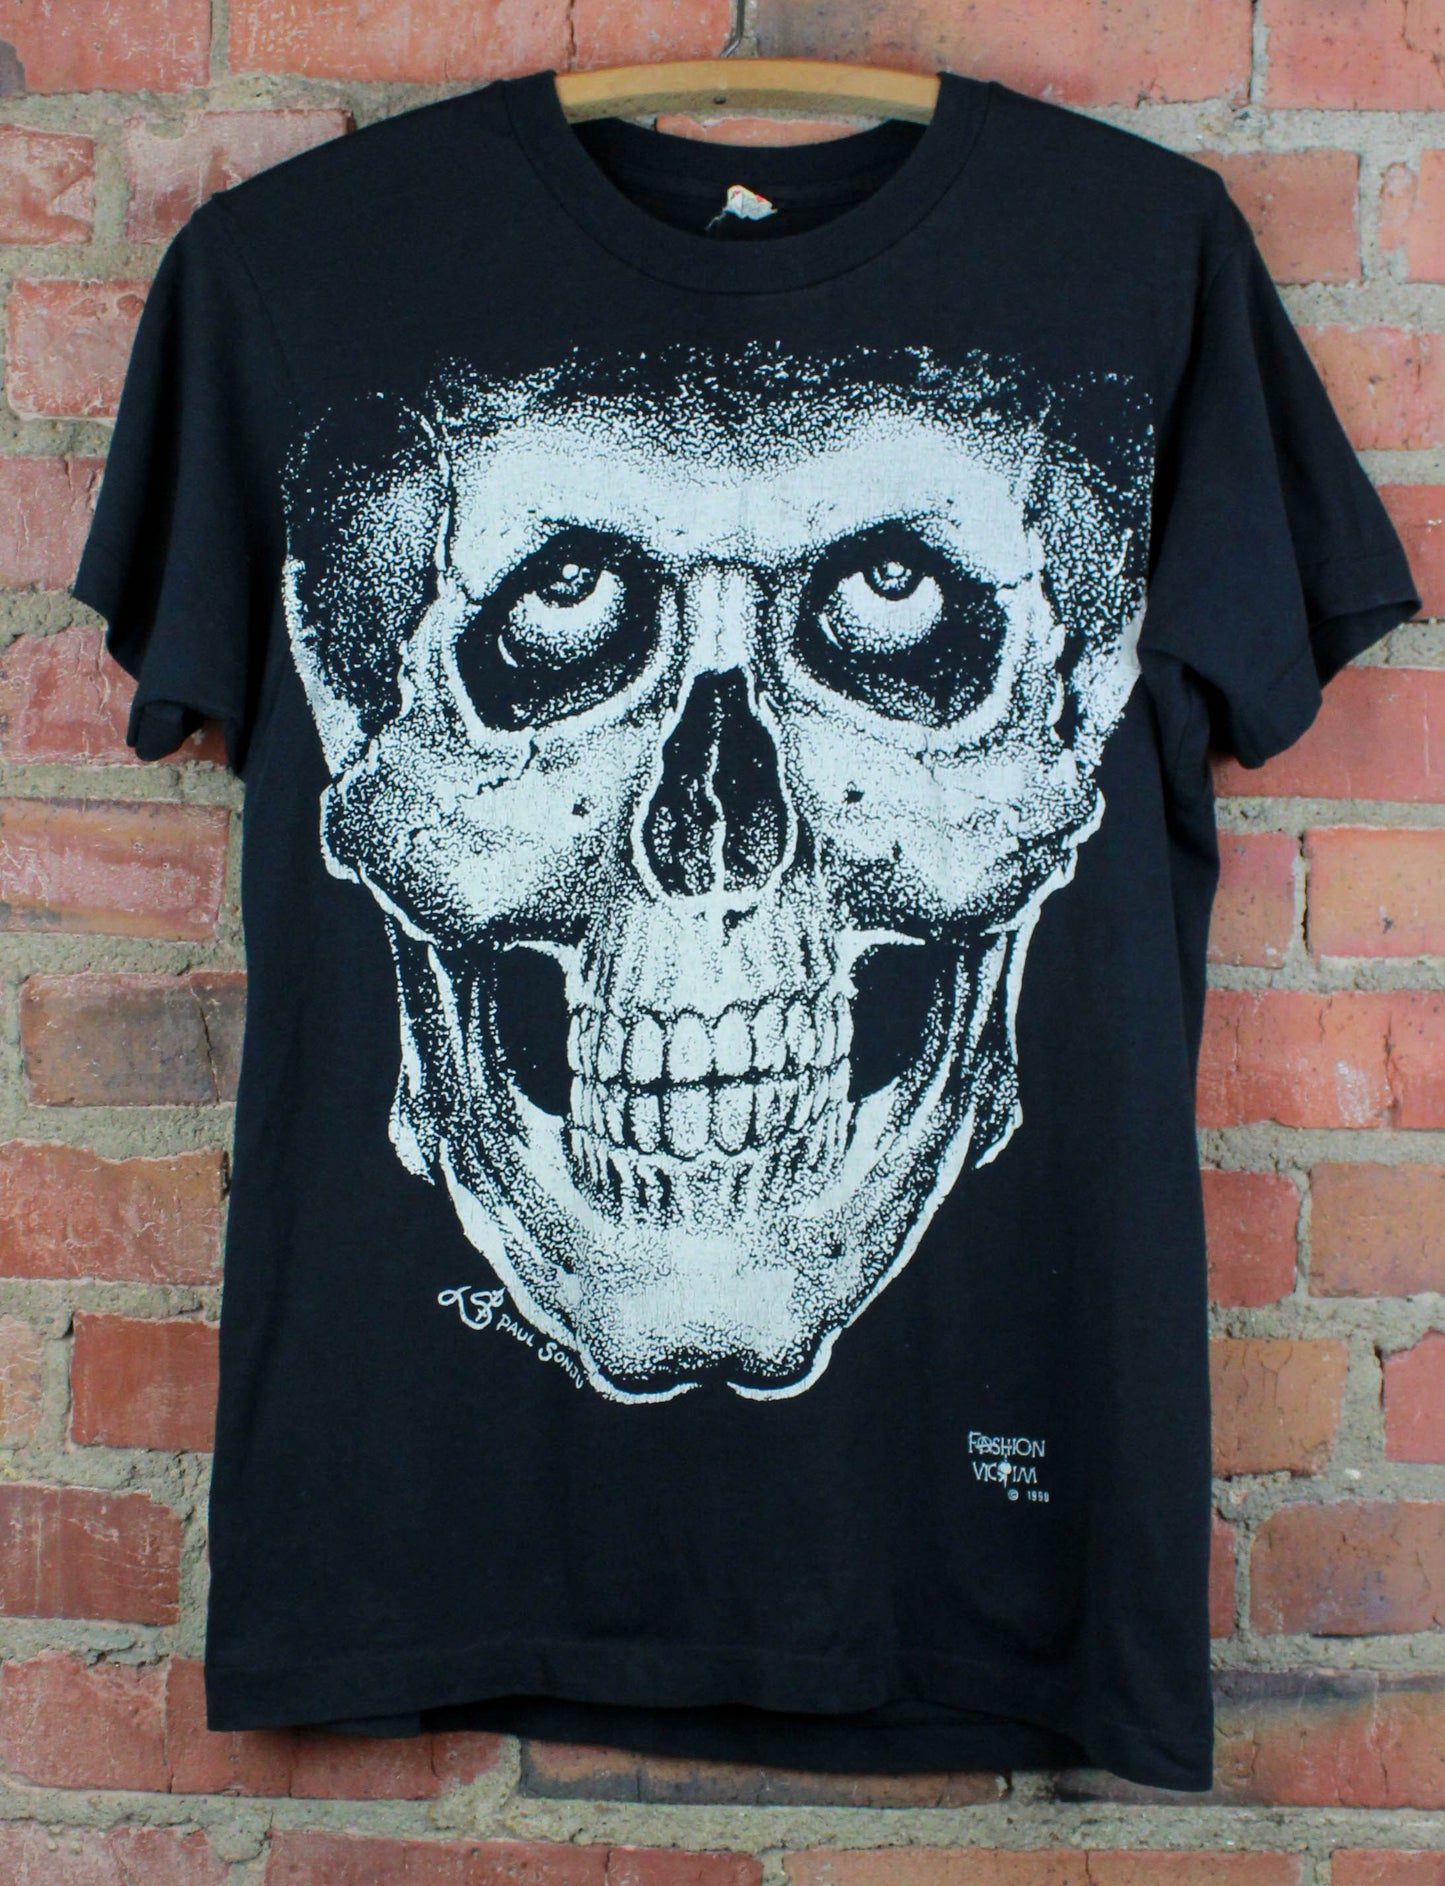 Vintage 1990 Fashion Victim Graphic T Shirt Double Sided Skulls Black Unisex Small/Medium